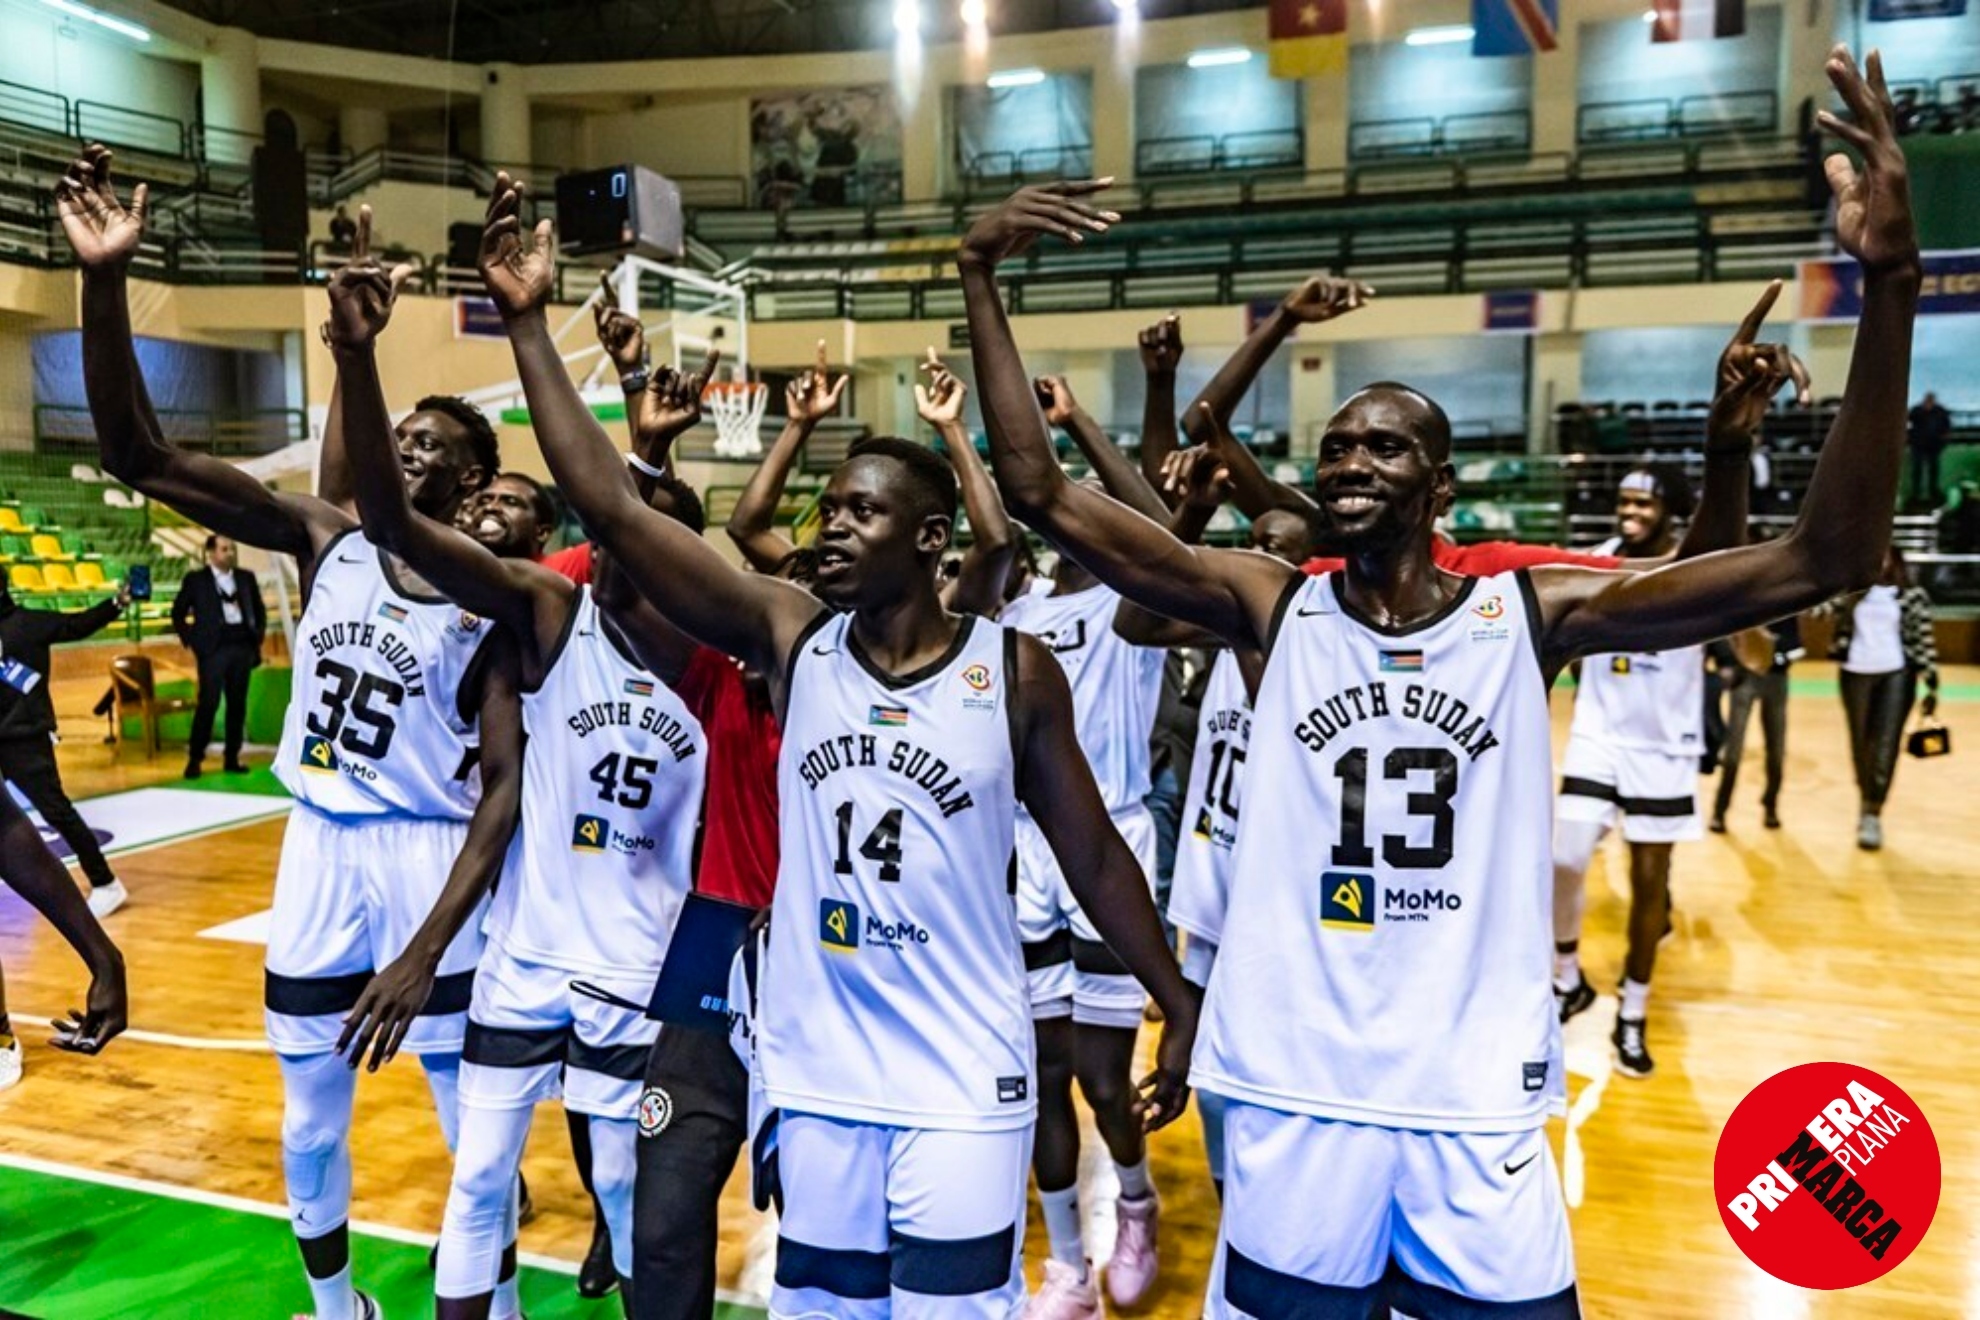 Basketball star and former refugee returns to South Sudan